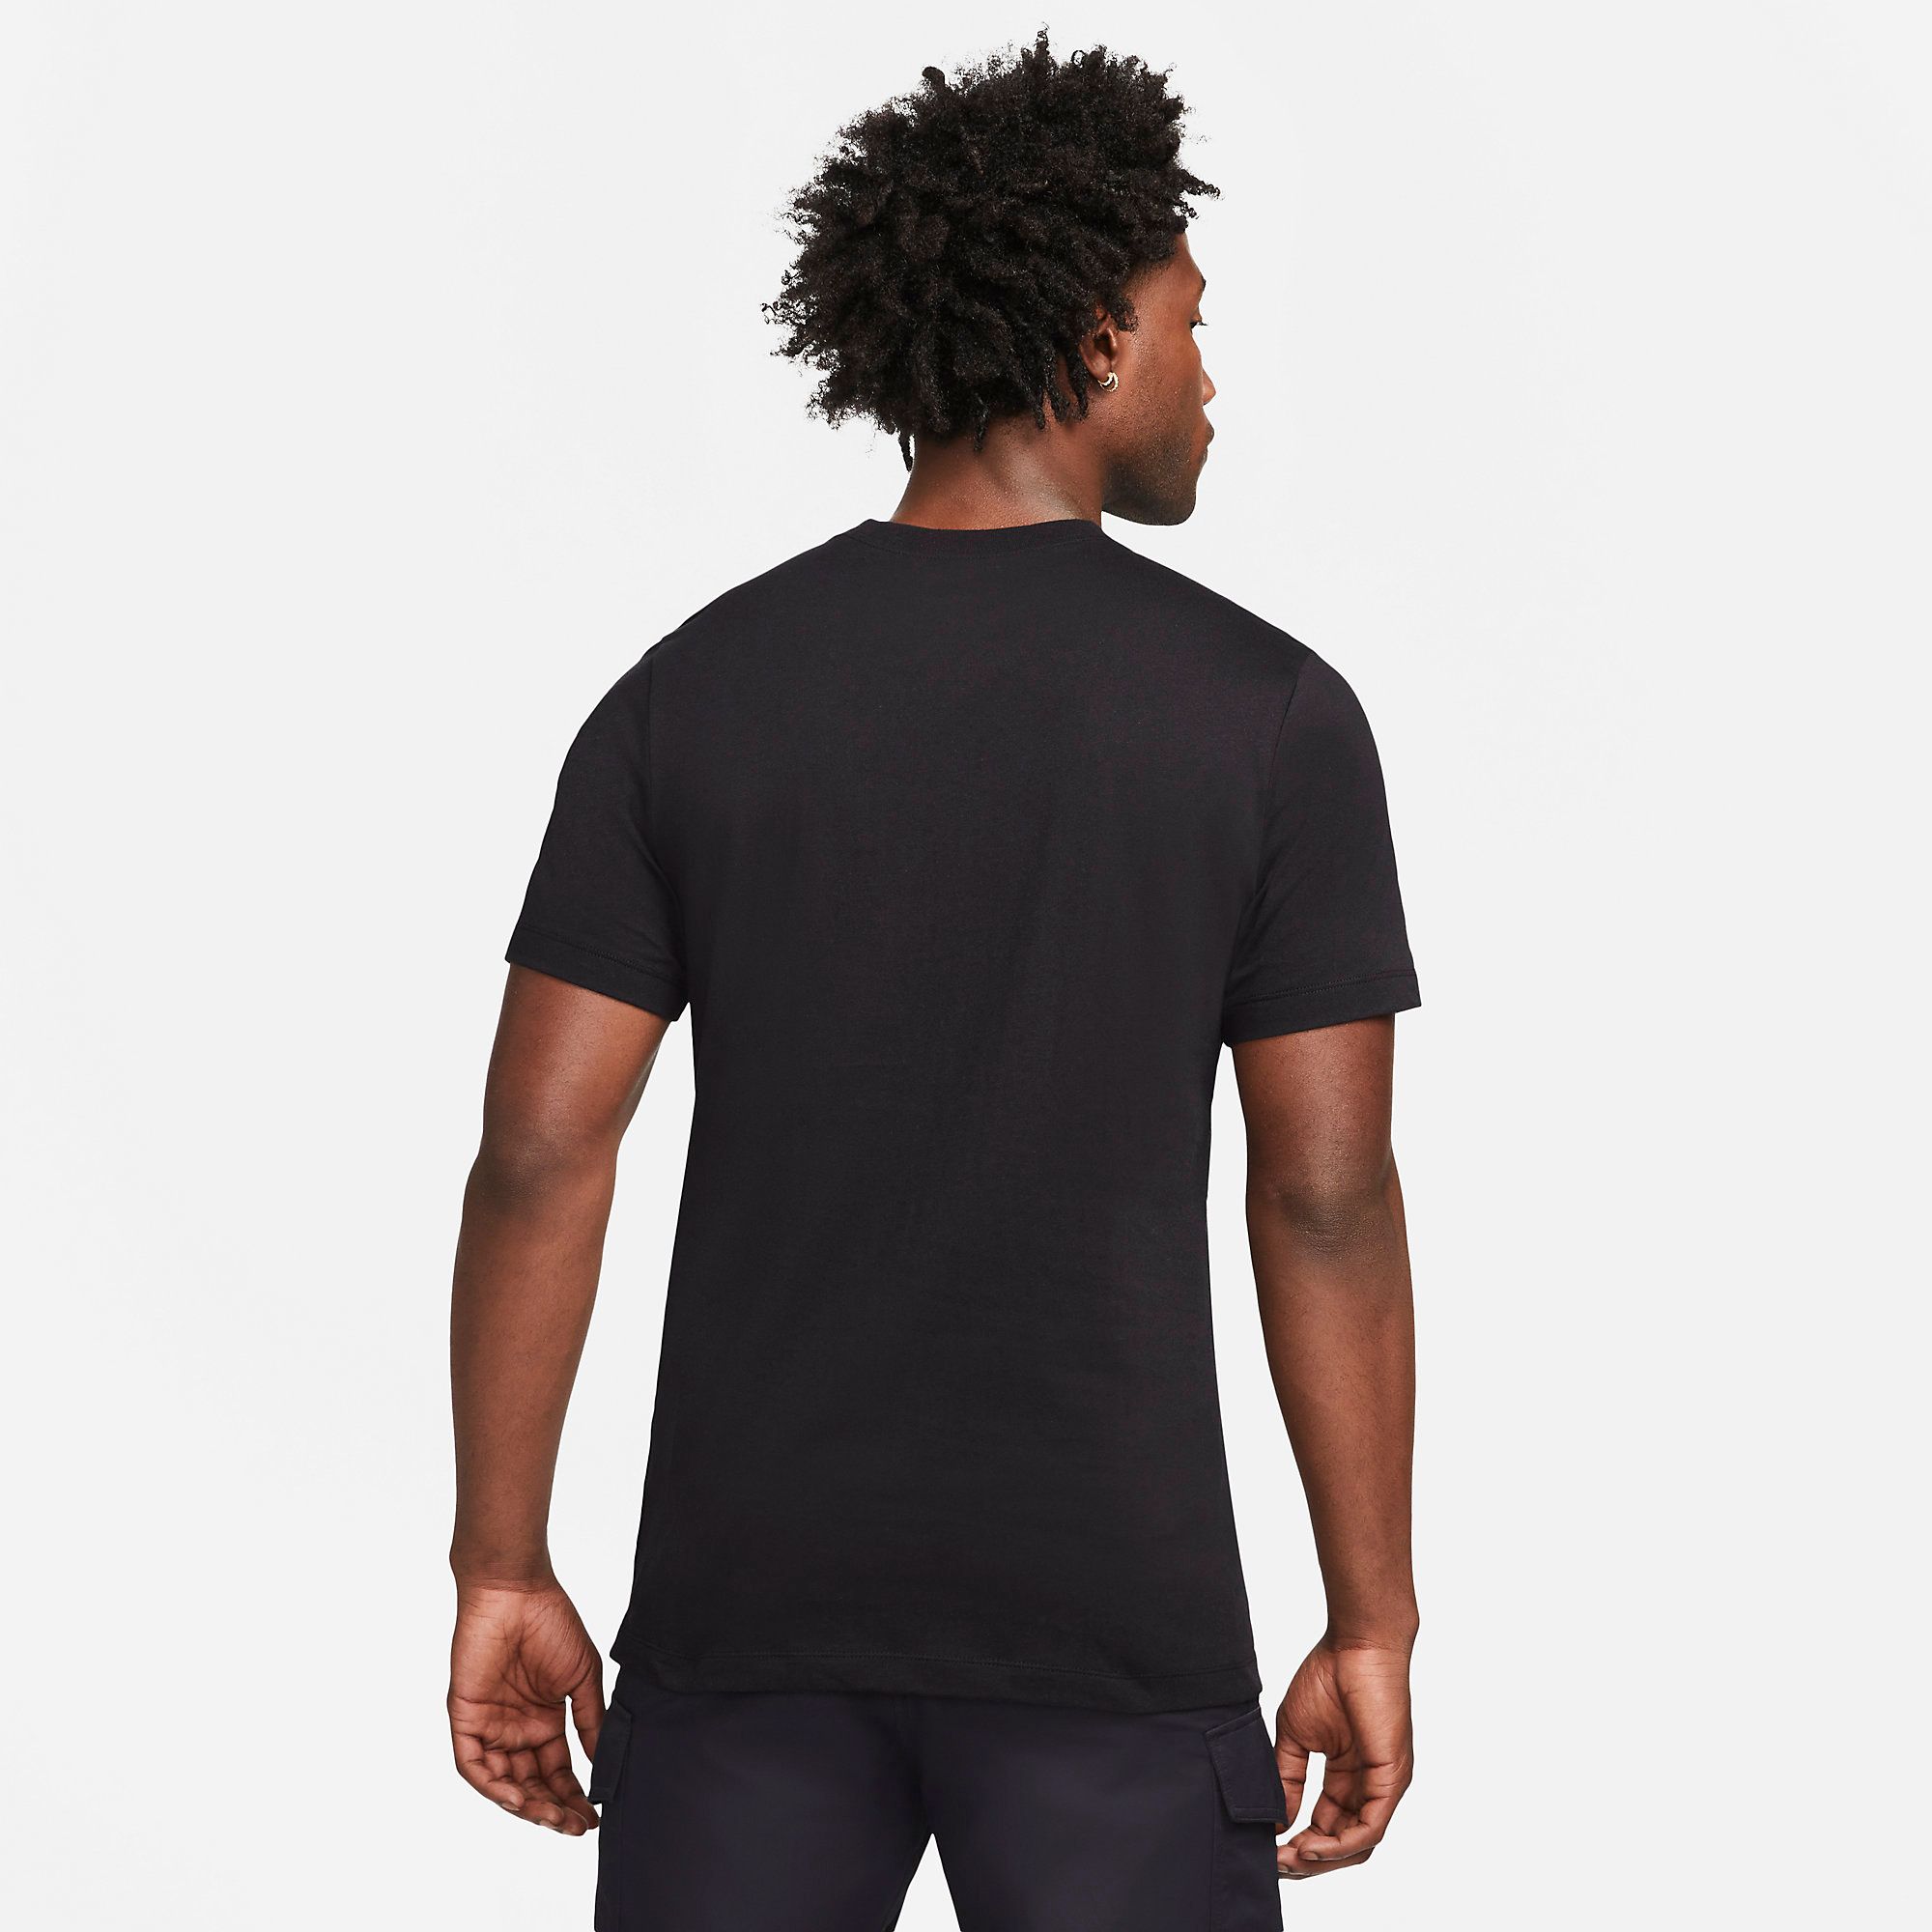  Nike Sportswear Black Light T-Shirt - Black 